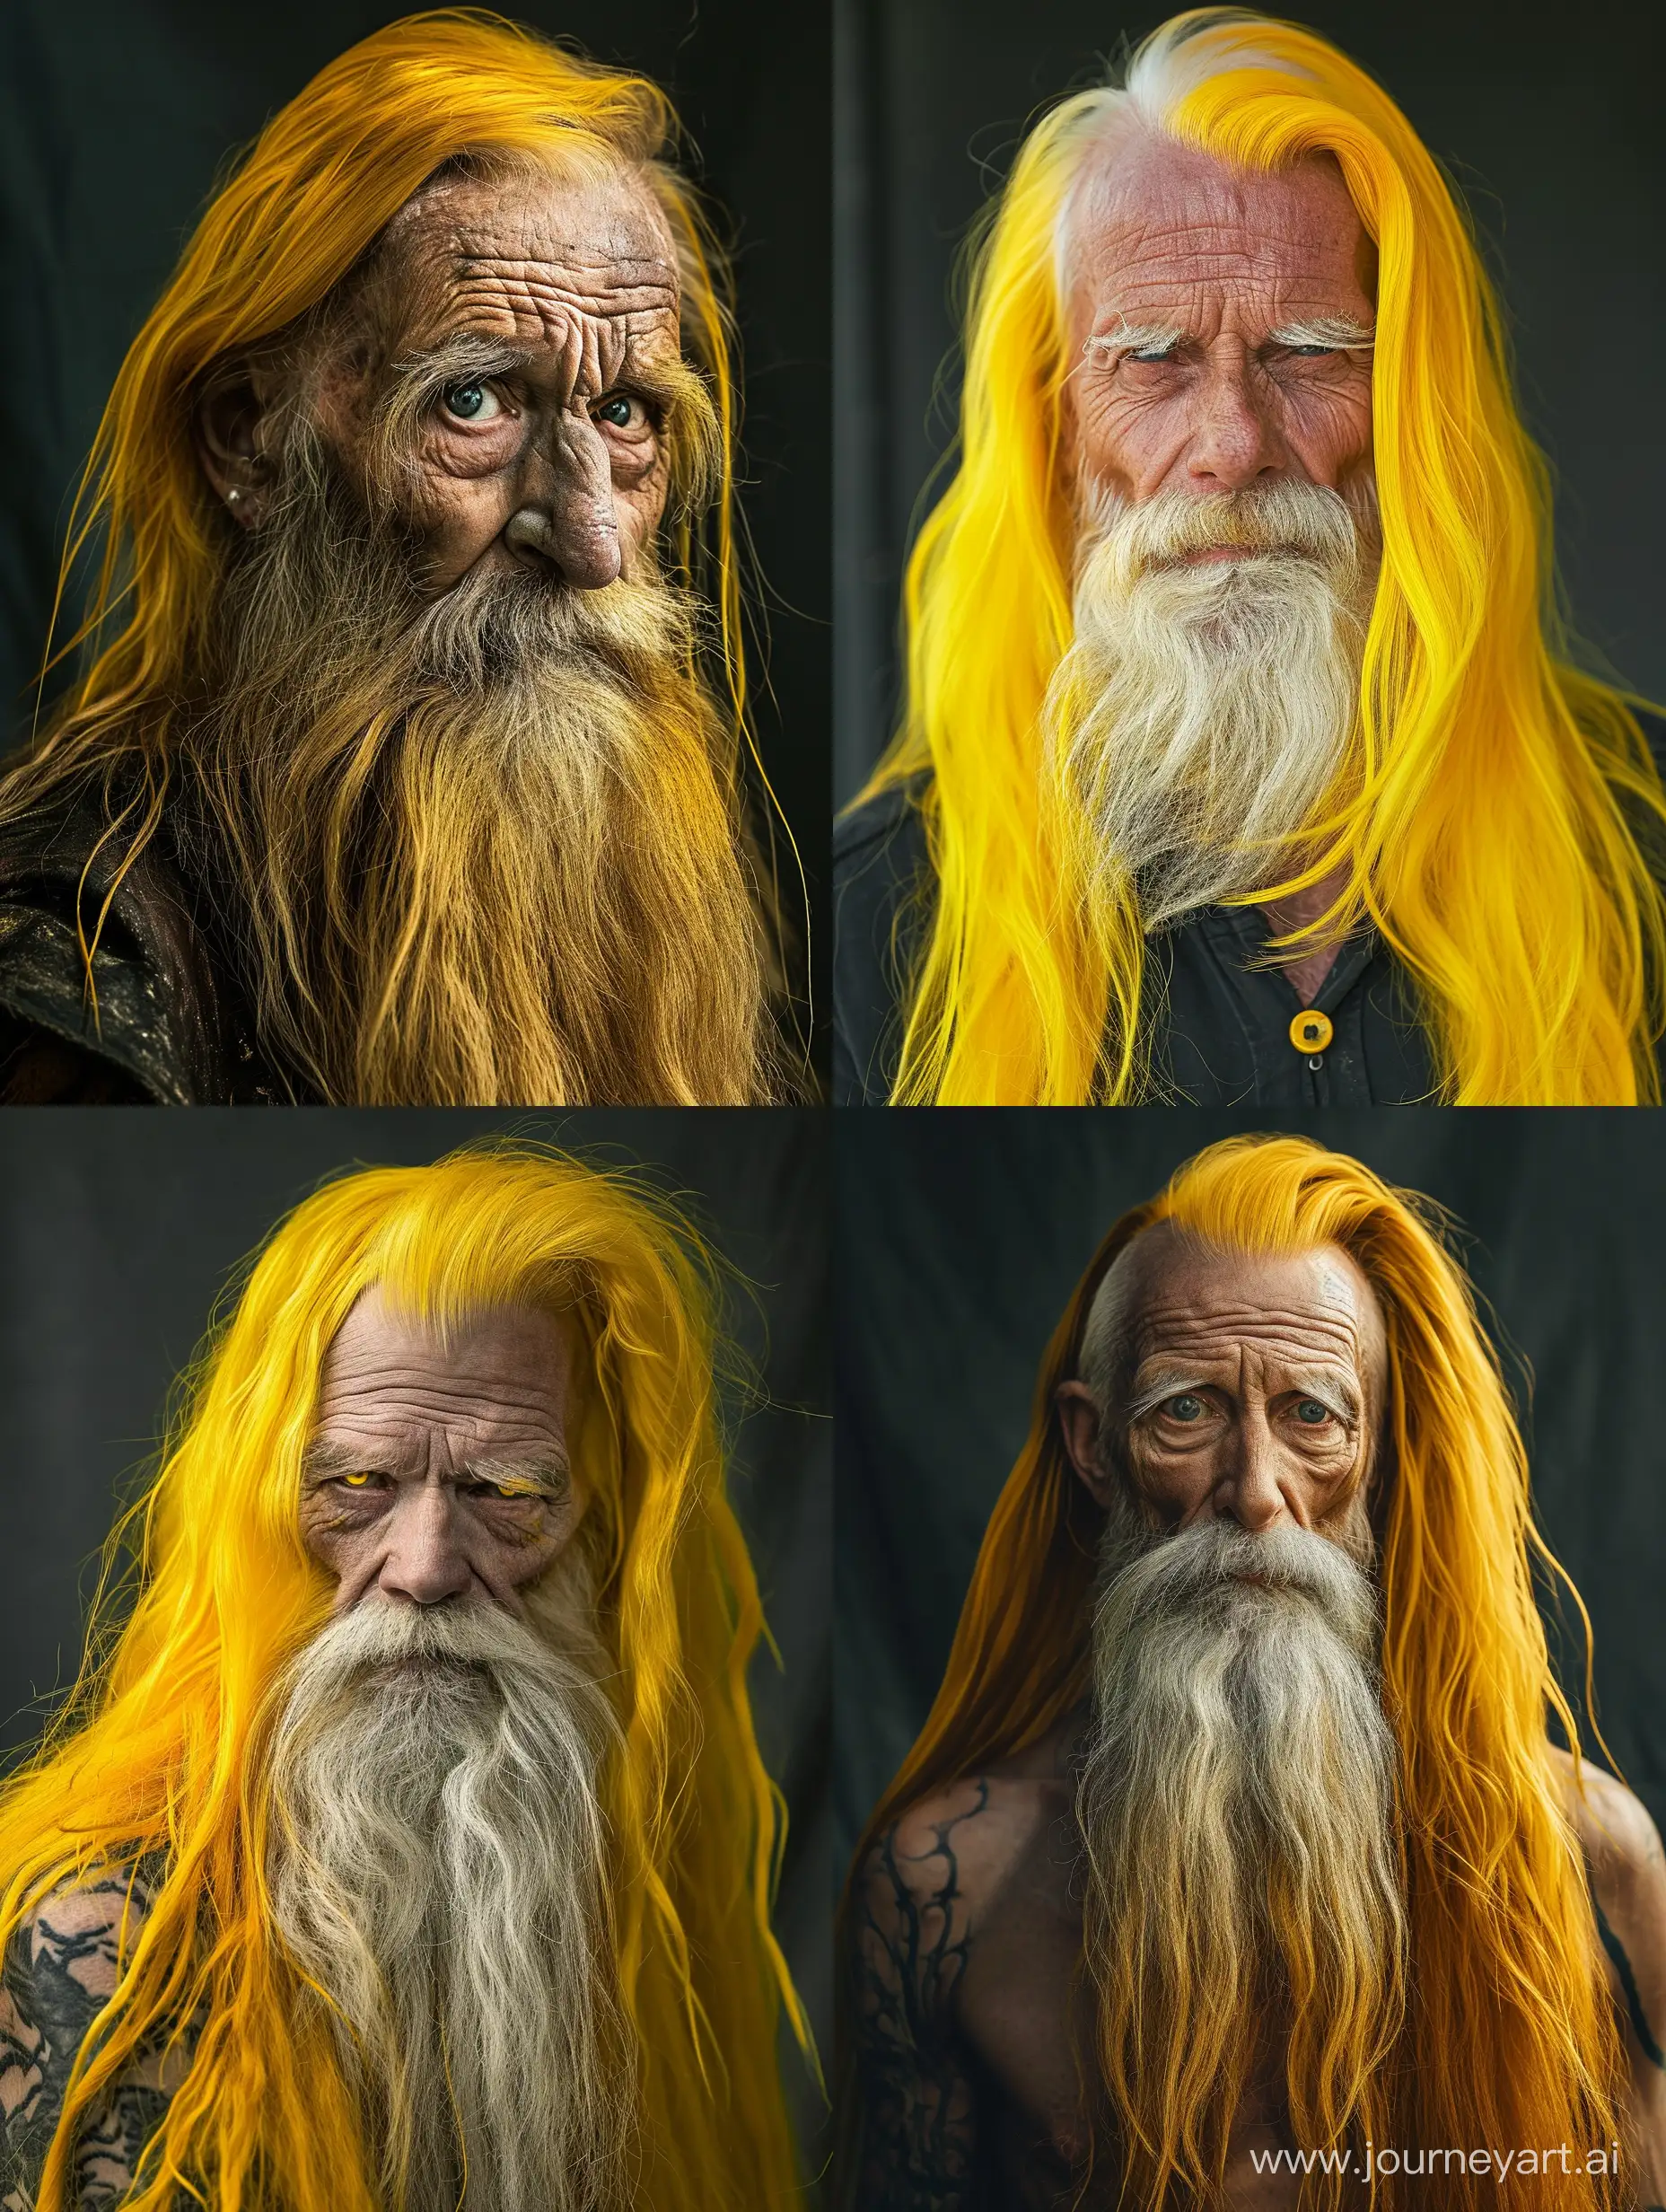 Elderly-Adventurer-with-Long-Yellow-Hair-Embarking-on-a-Midjourney